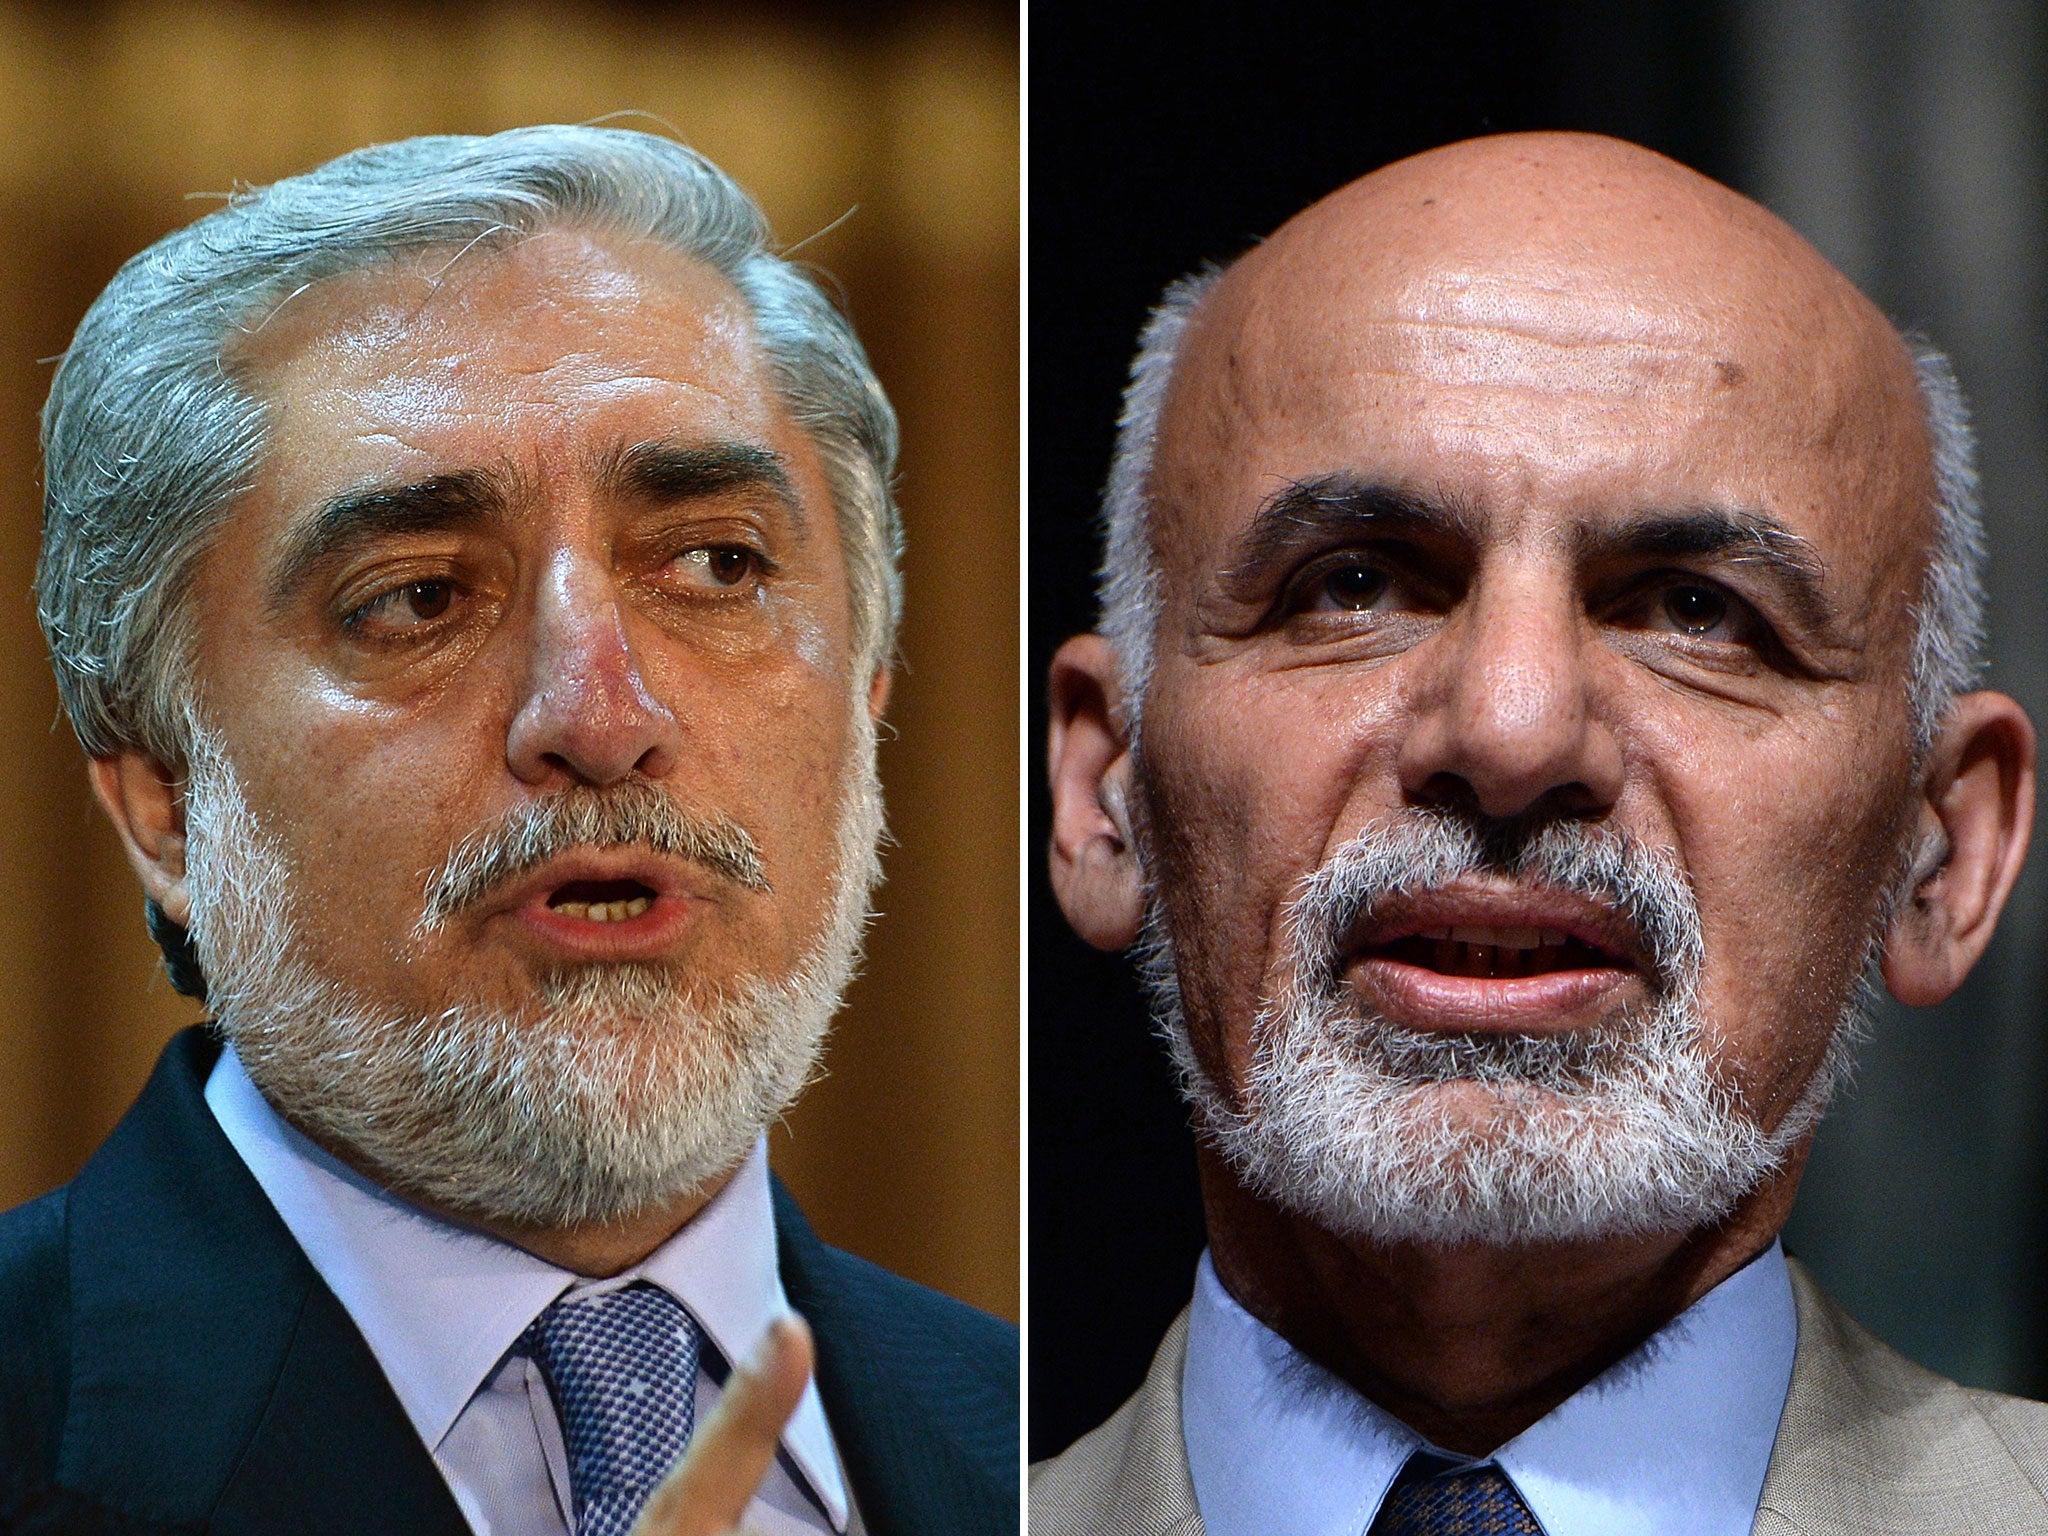 Northern Alliance leader Abdullah Abdullah, left, and the former Finance Minister Ashraf Ghani